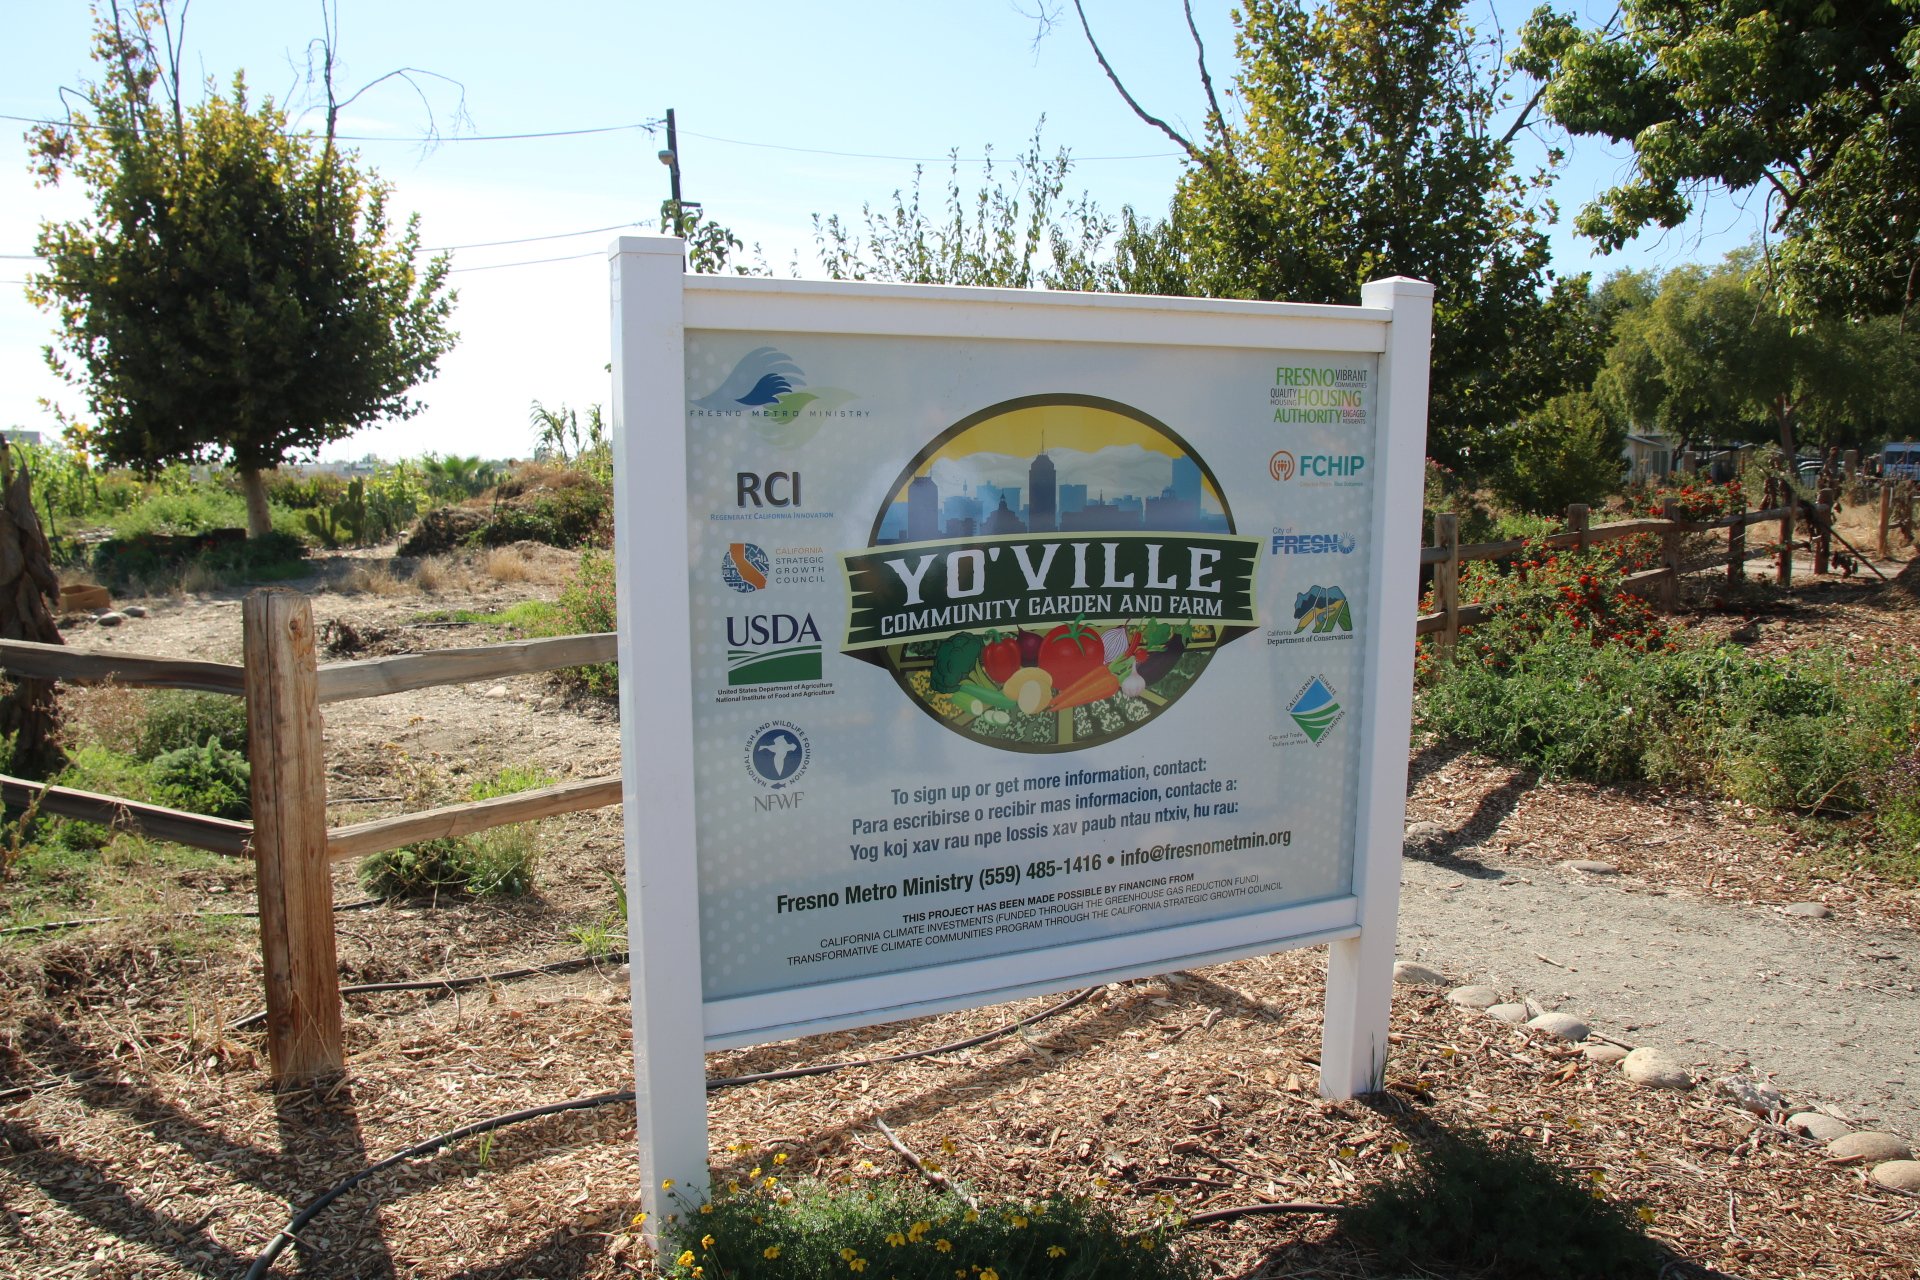 The entrance to the Yo'Ville Community Garden and Farm